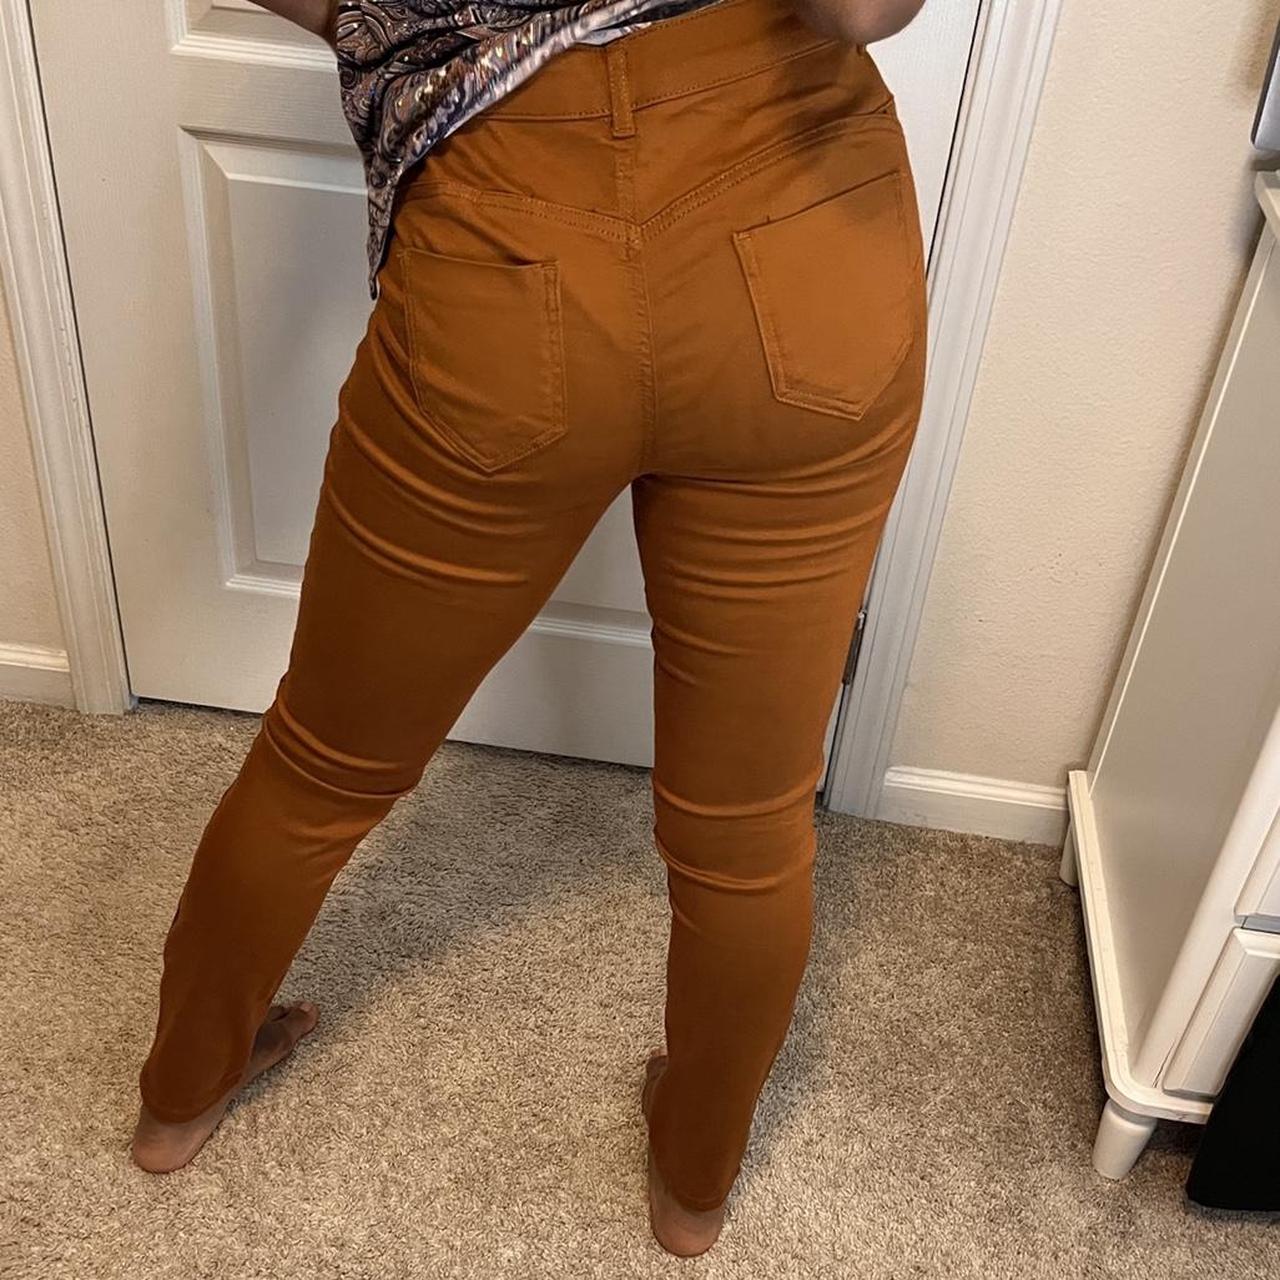 Calzedonia Women's Orange Trousers (2)